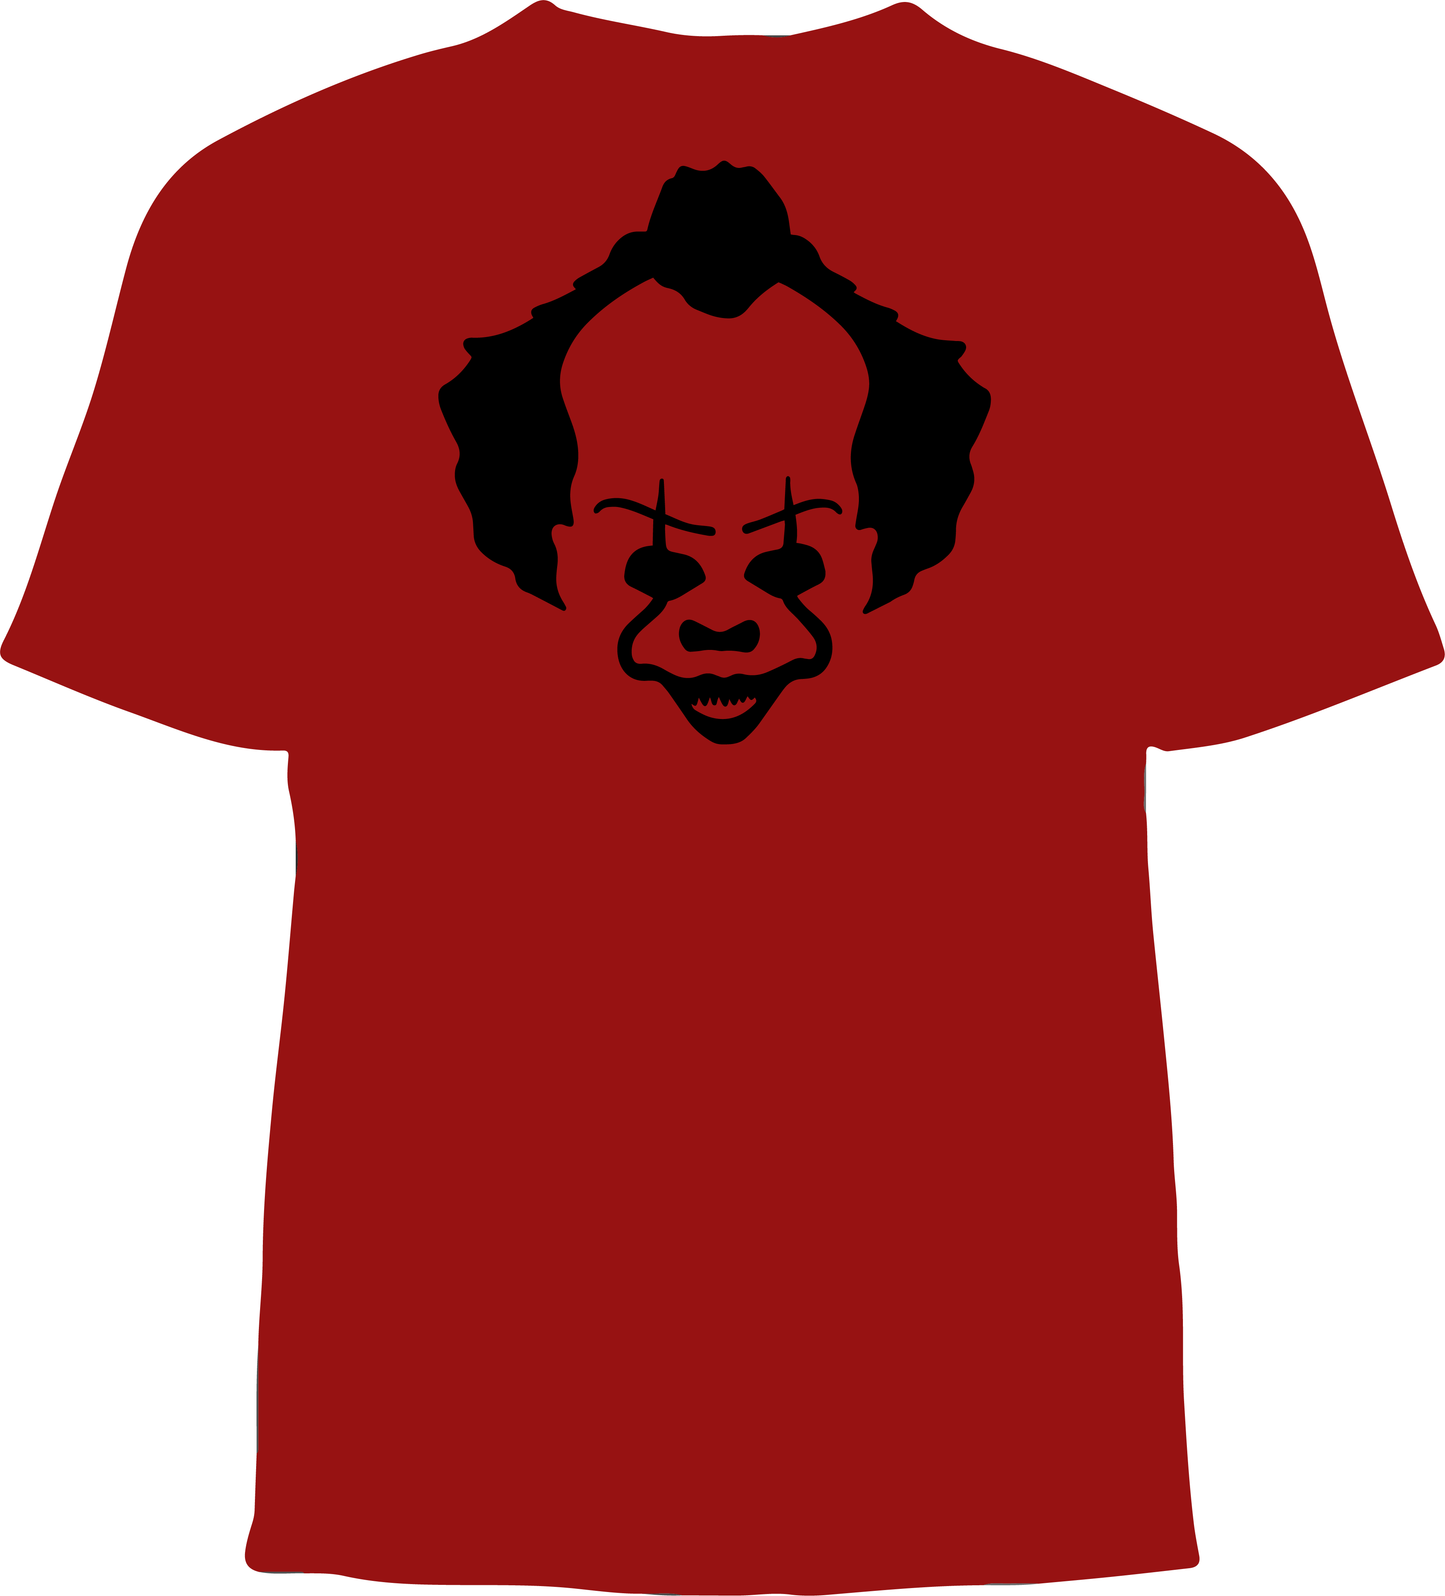 "Creepy Clown" Tee Shirt Design